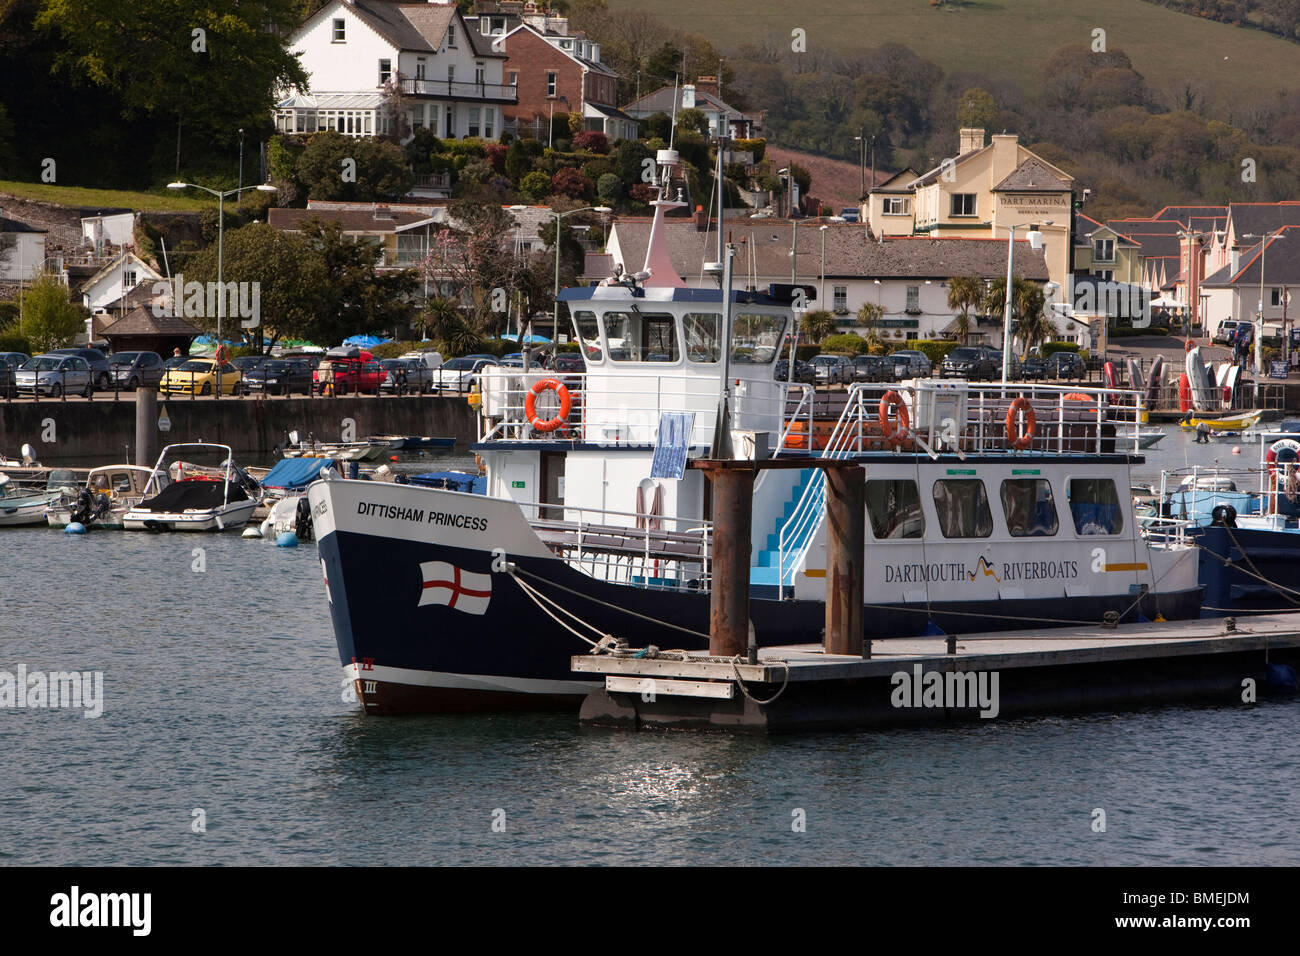 UK, England, Devon, Dartmouth, River Dart Dittisham Princess foot passenger ferry at main jetty Stock Photo